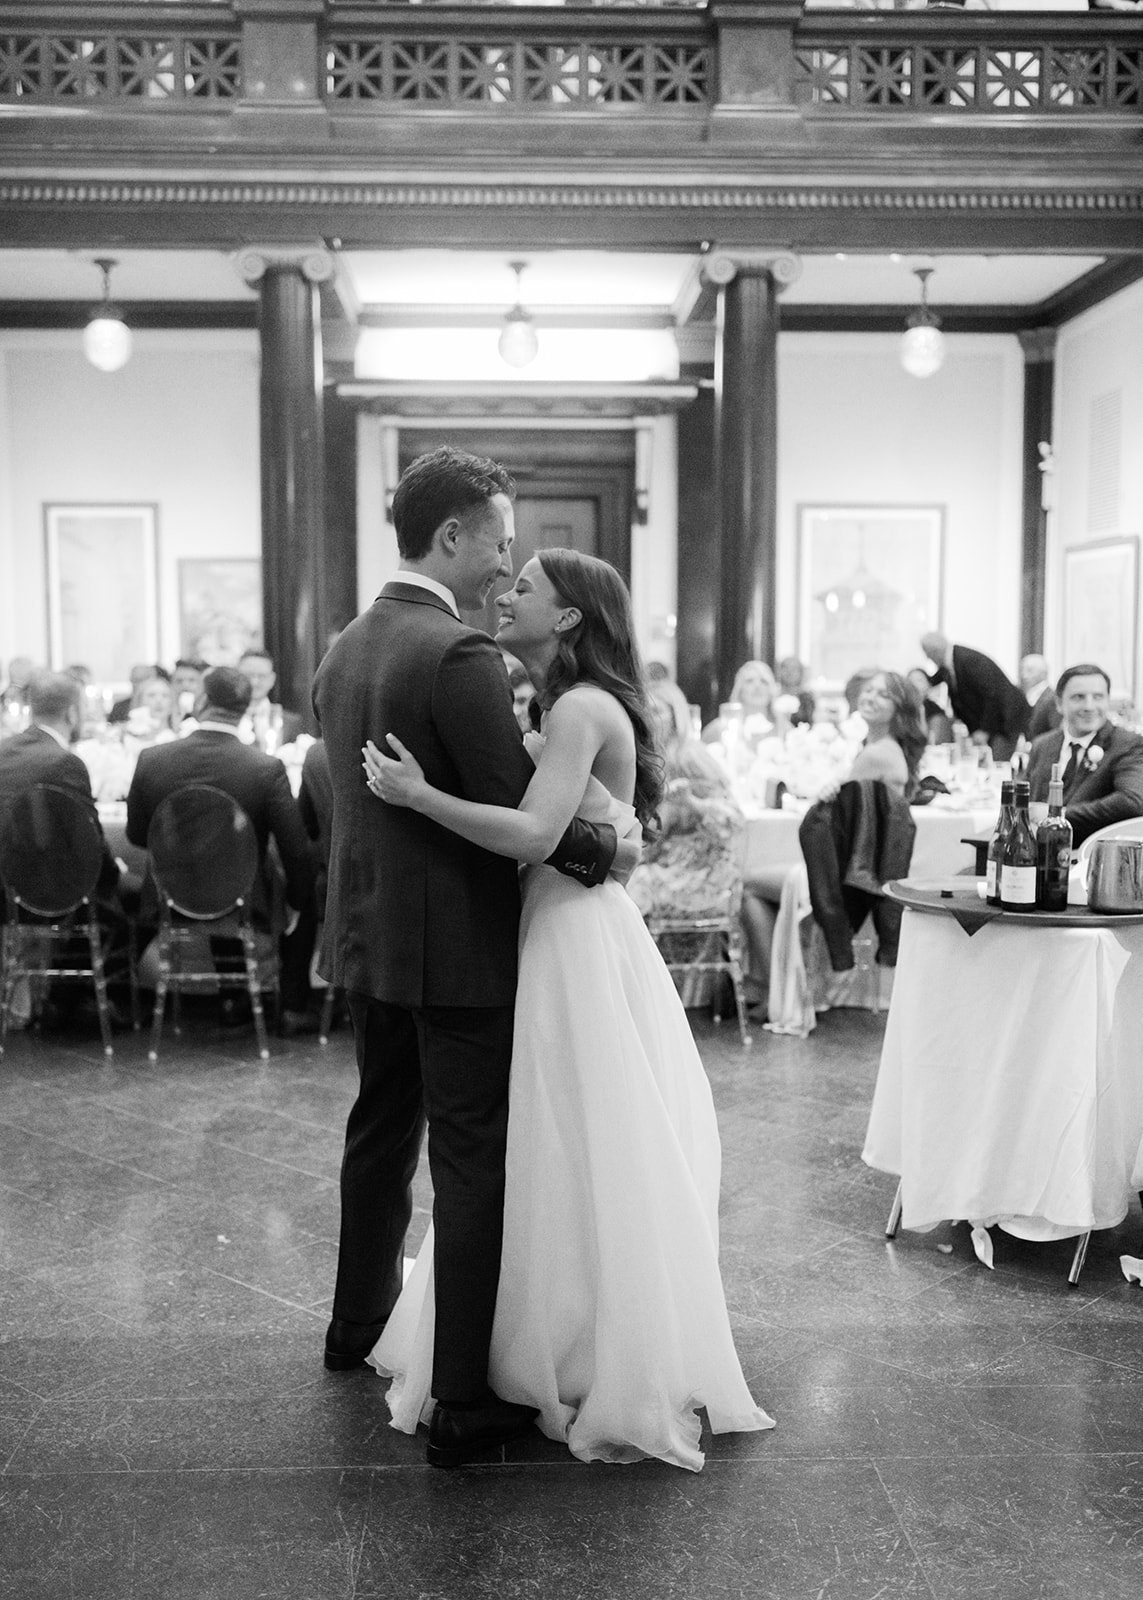 Best-Austin-Wedding-Photographers-Elopement-Film-35mm-Asheville-Santa-Barbara-1058.jpg